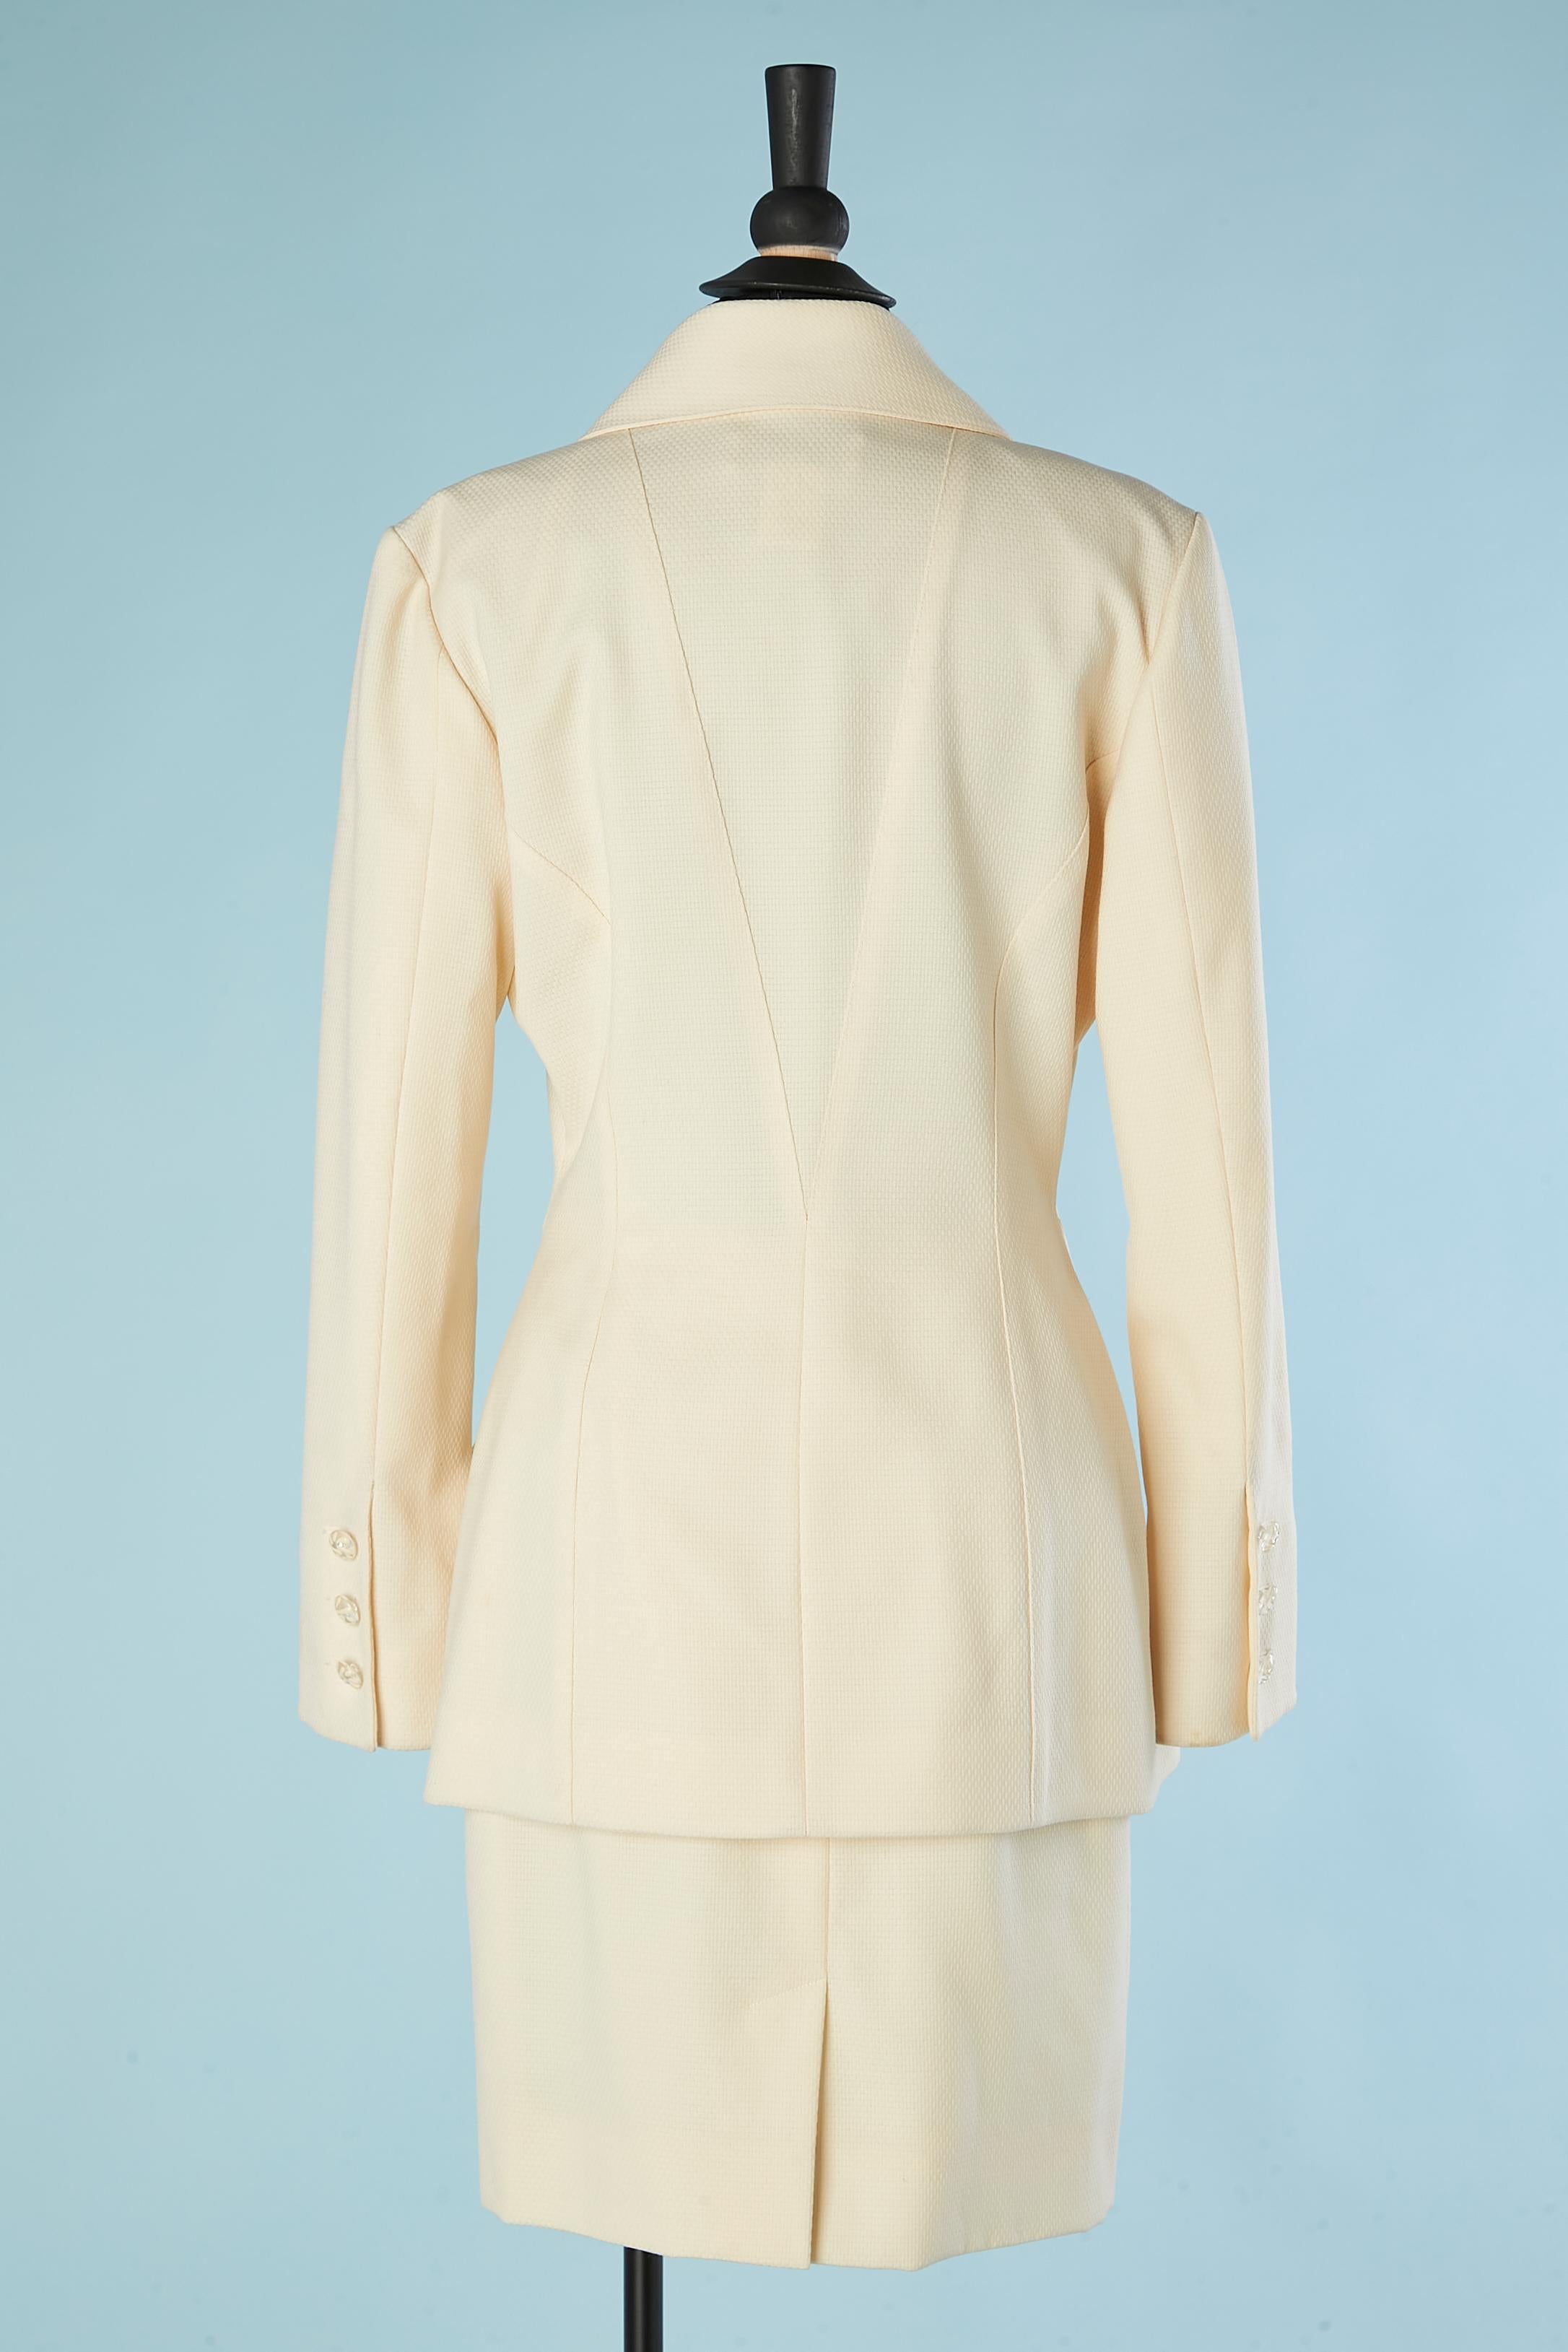 Women's or Men's Off-white skirt suit Karl Lagerfeld for Neiman Marcus  For Sale